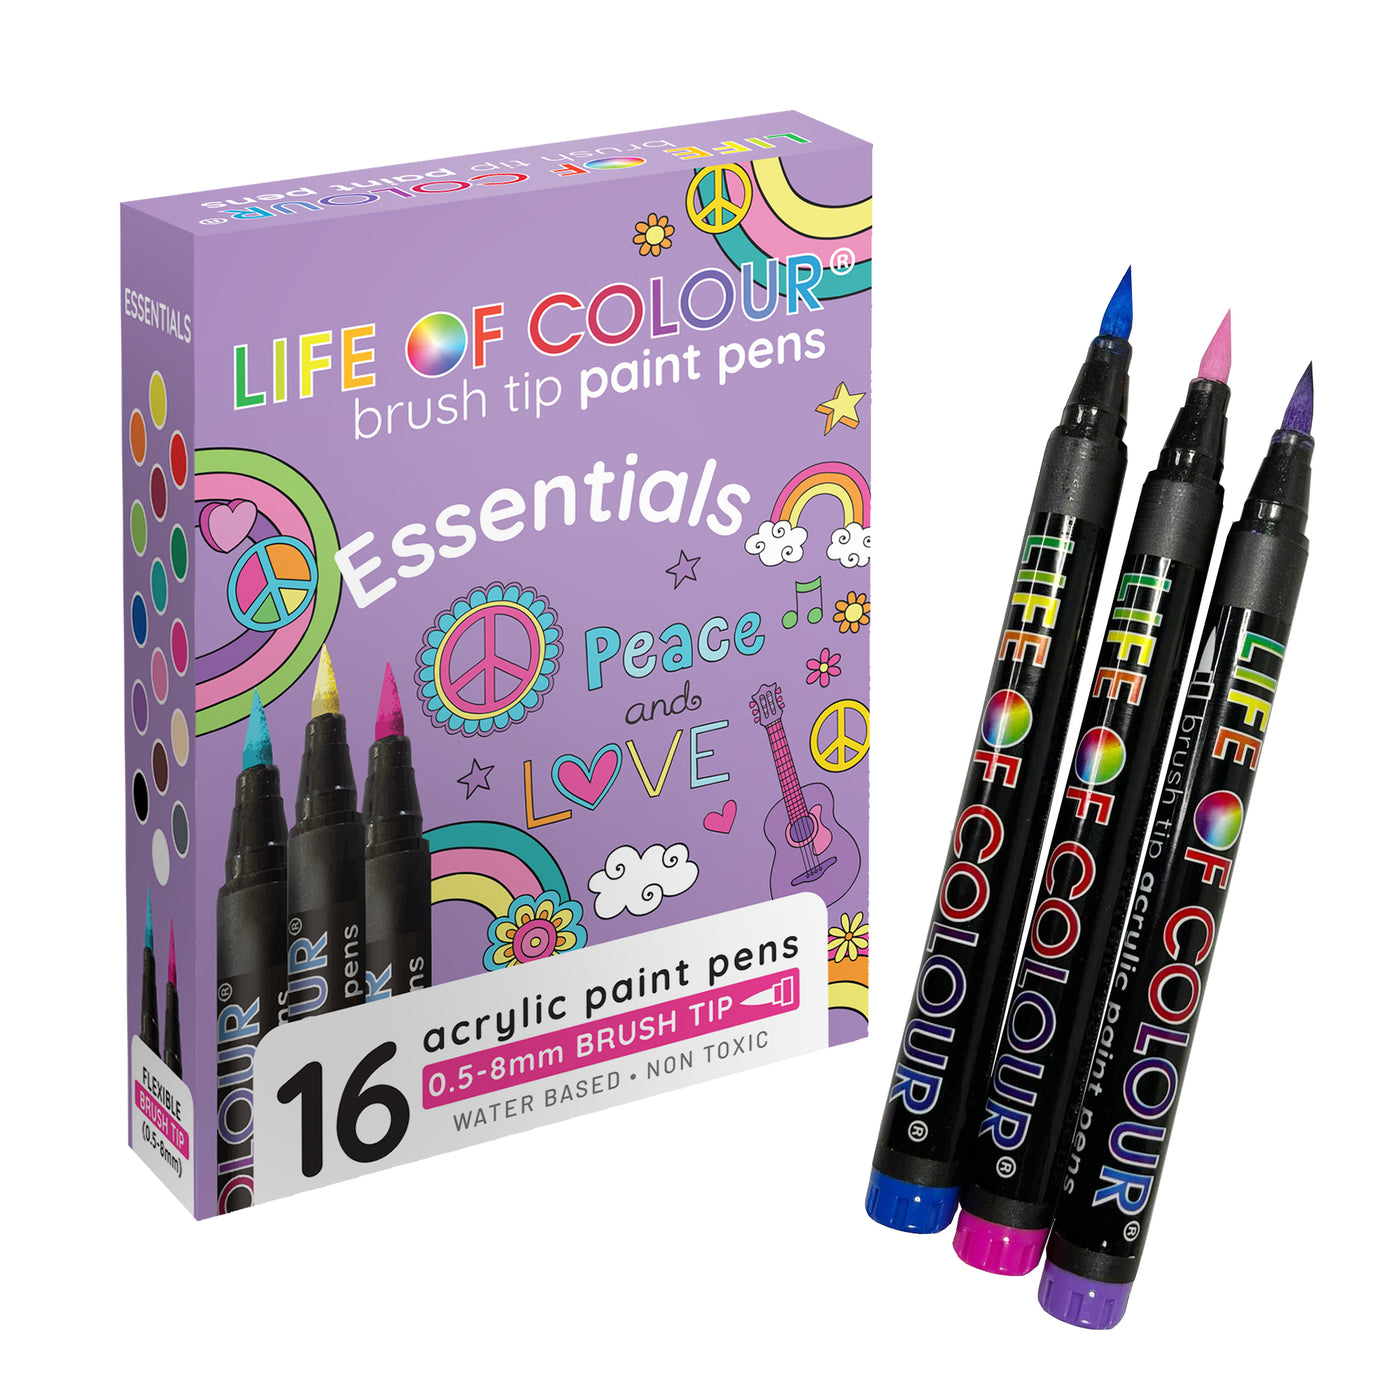 Life of Colour, Essential Colours Brush Tip Acrylic Paint Pens - Set of 16